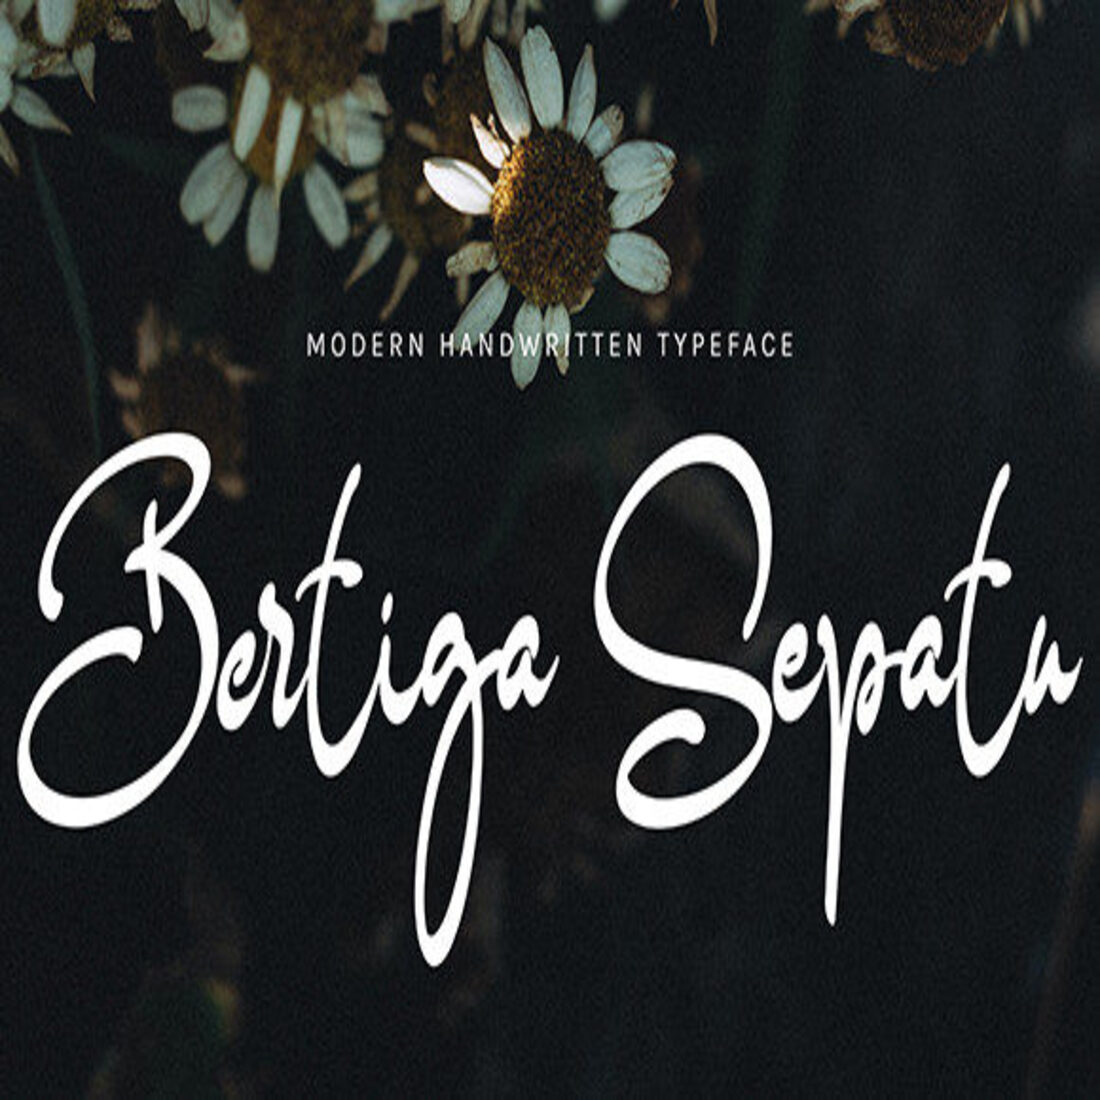 Bertiga Sepatu Font cover.